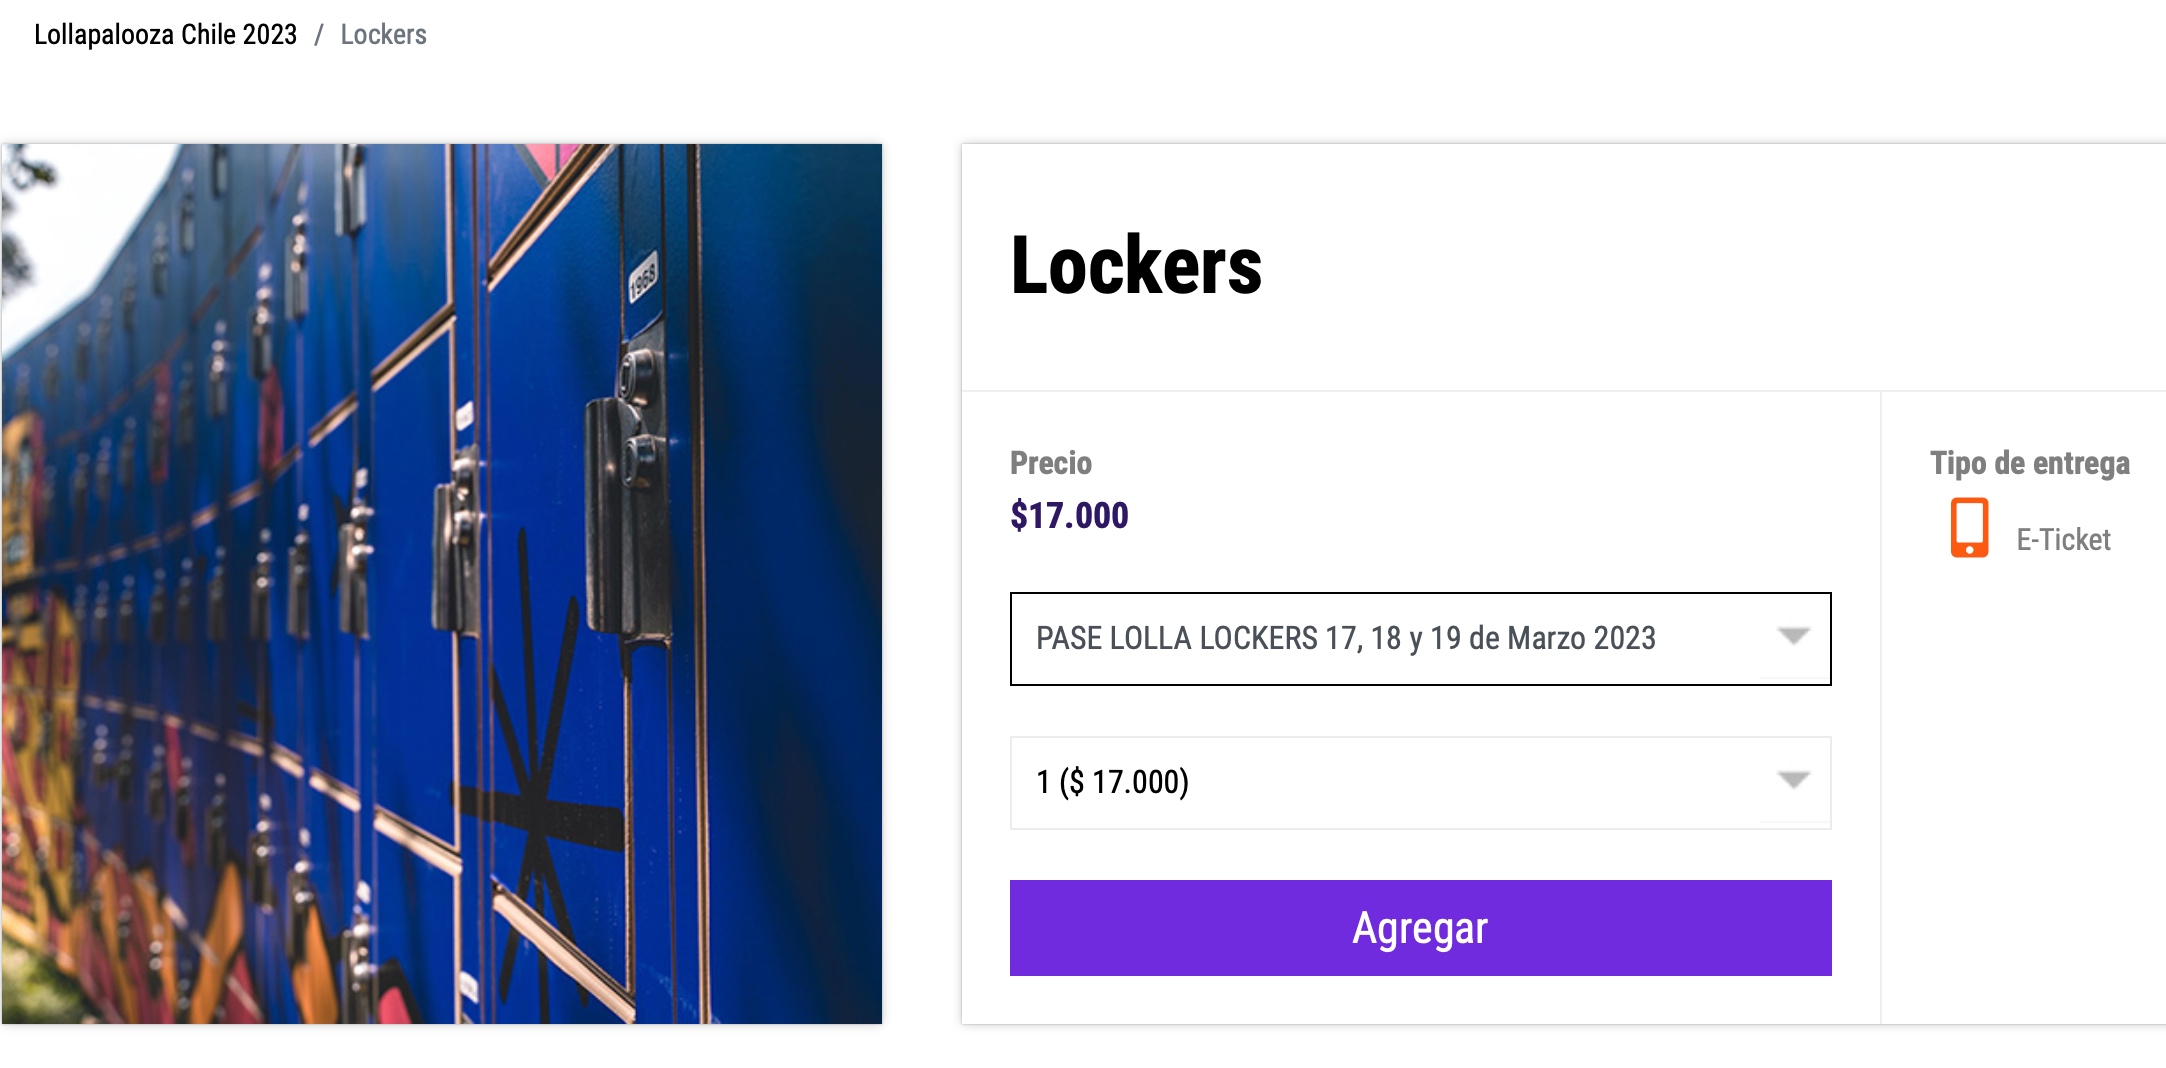 Lockers